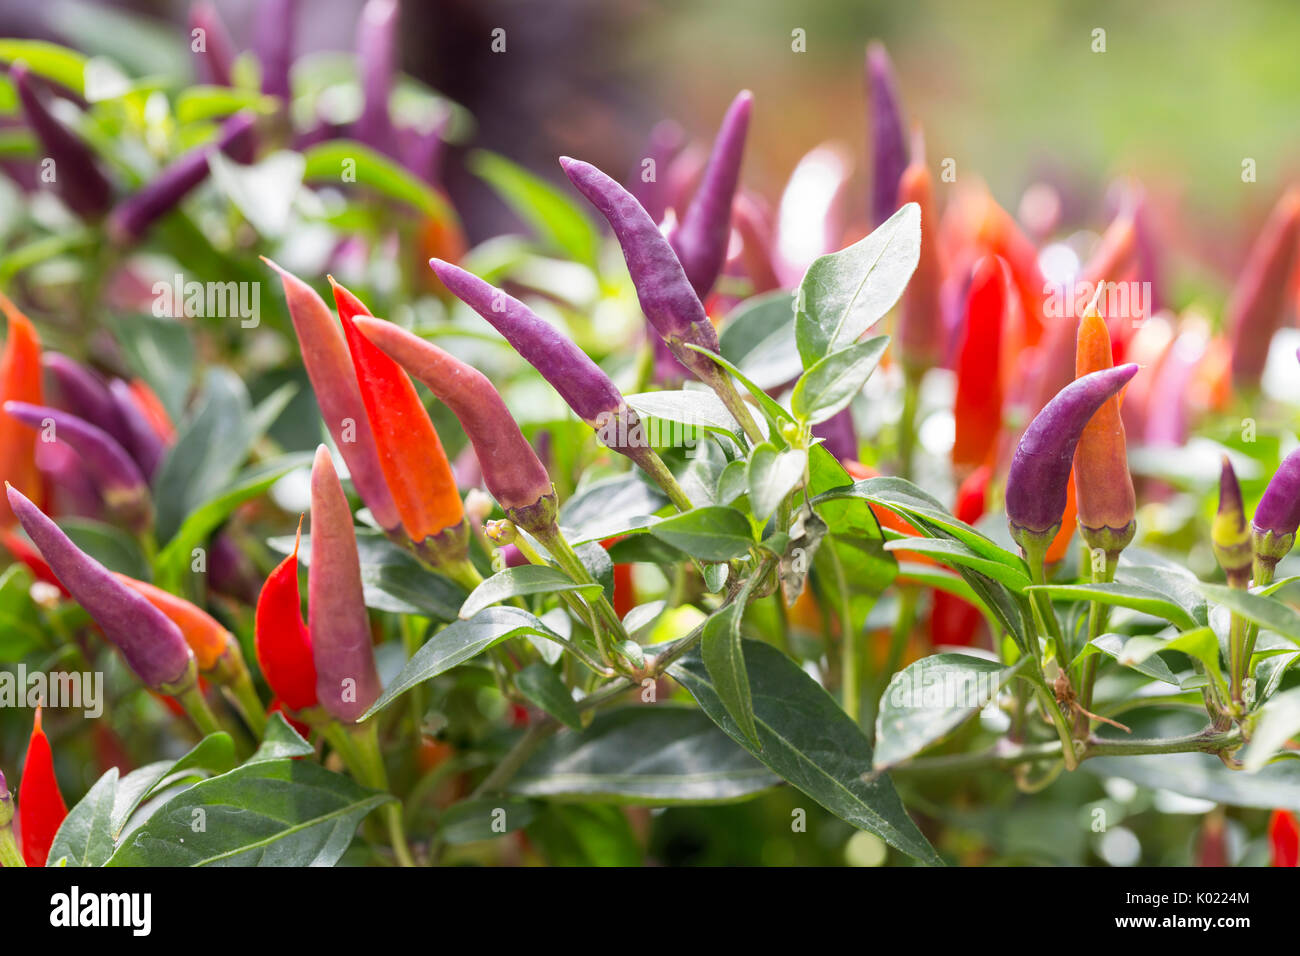 Ornamental Pepper plant Stock Photo